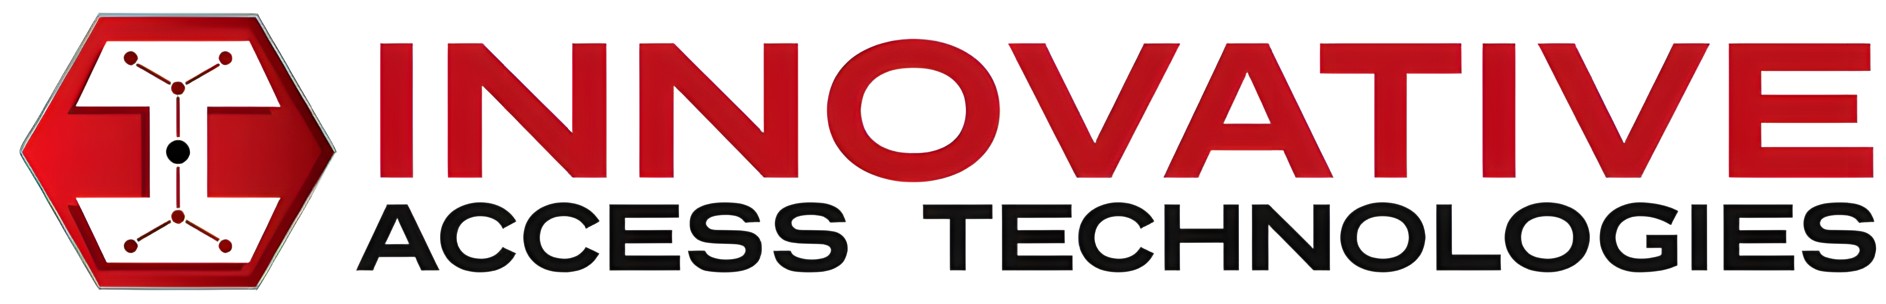 Innovative Access Technologies logo